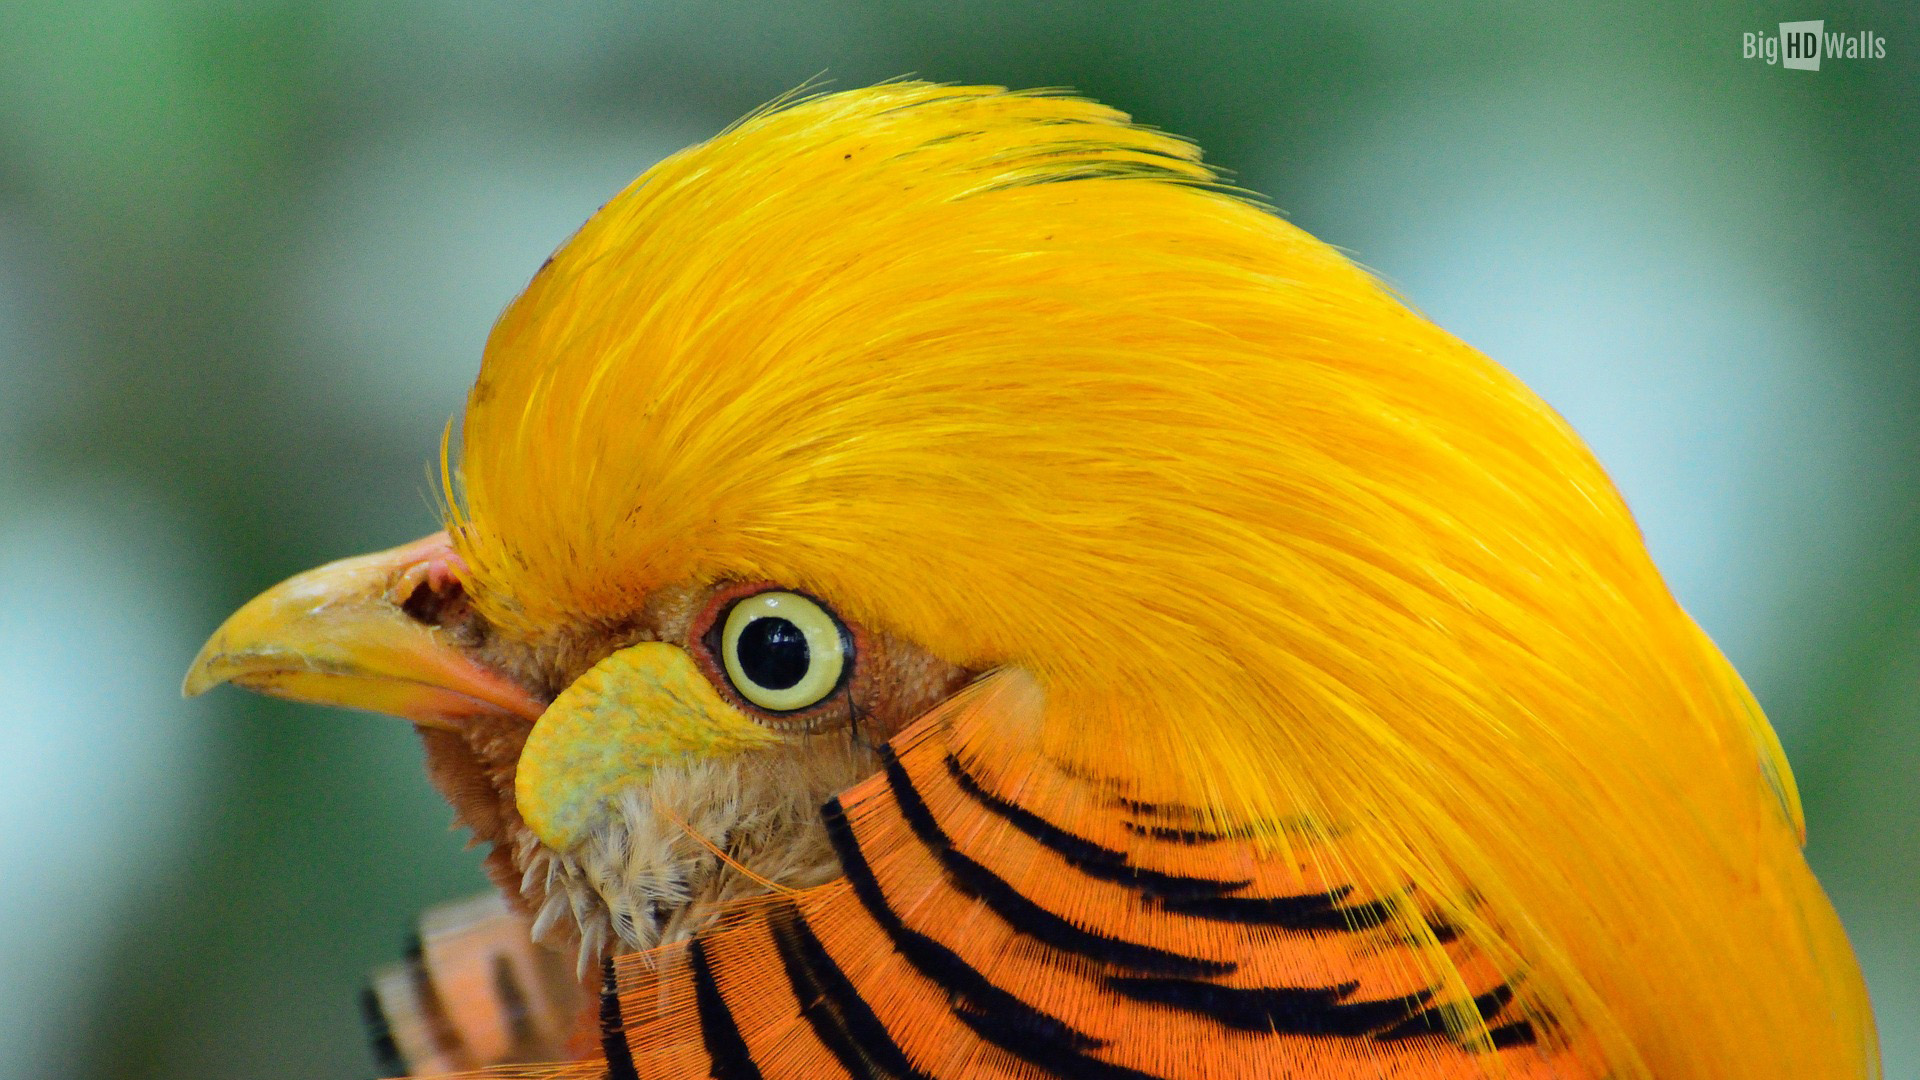 Golden Pheasant Exotic Bird HD Wallpaper BigHDwalls